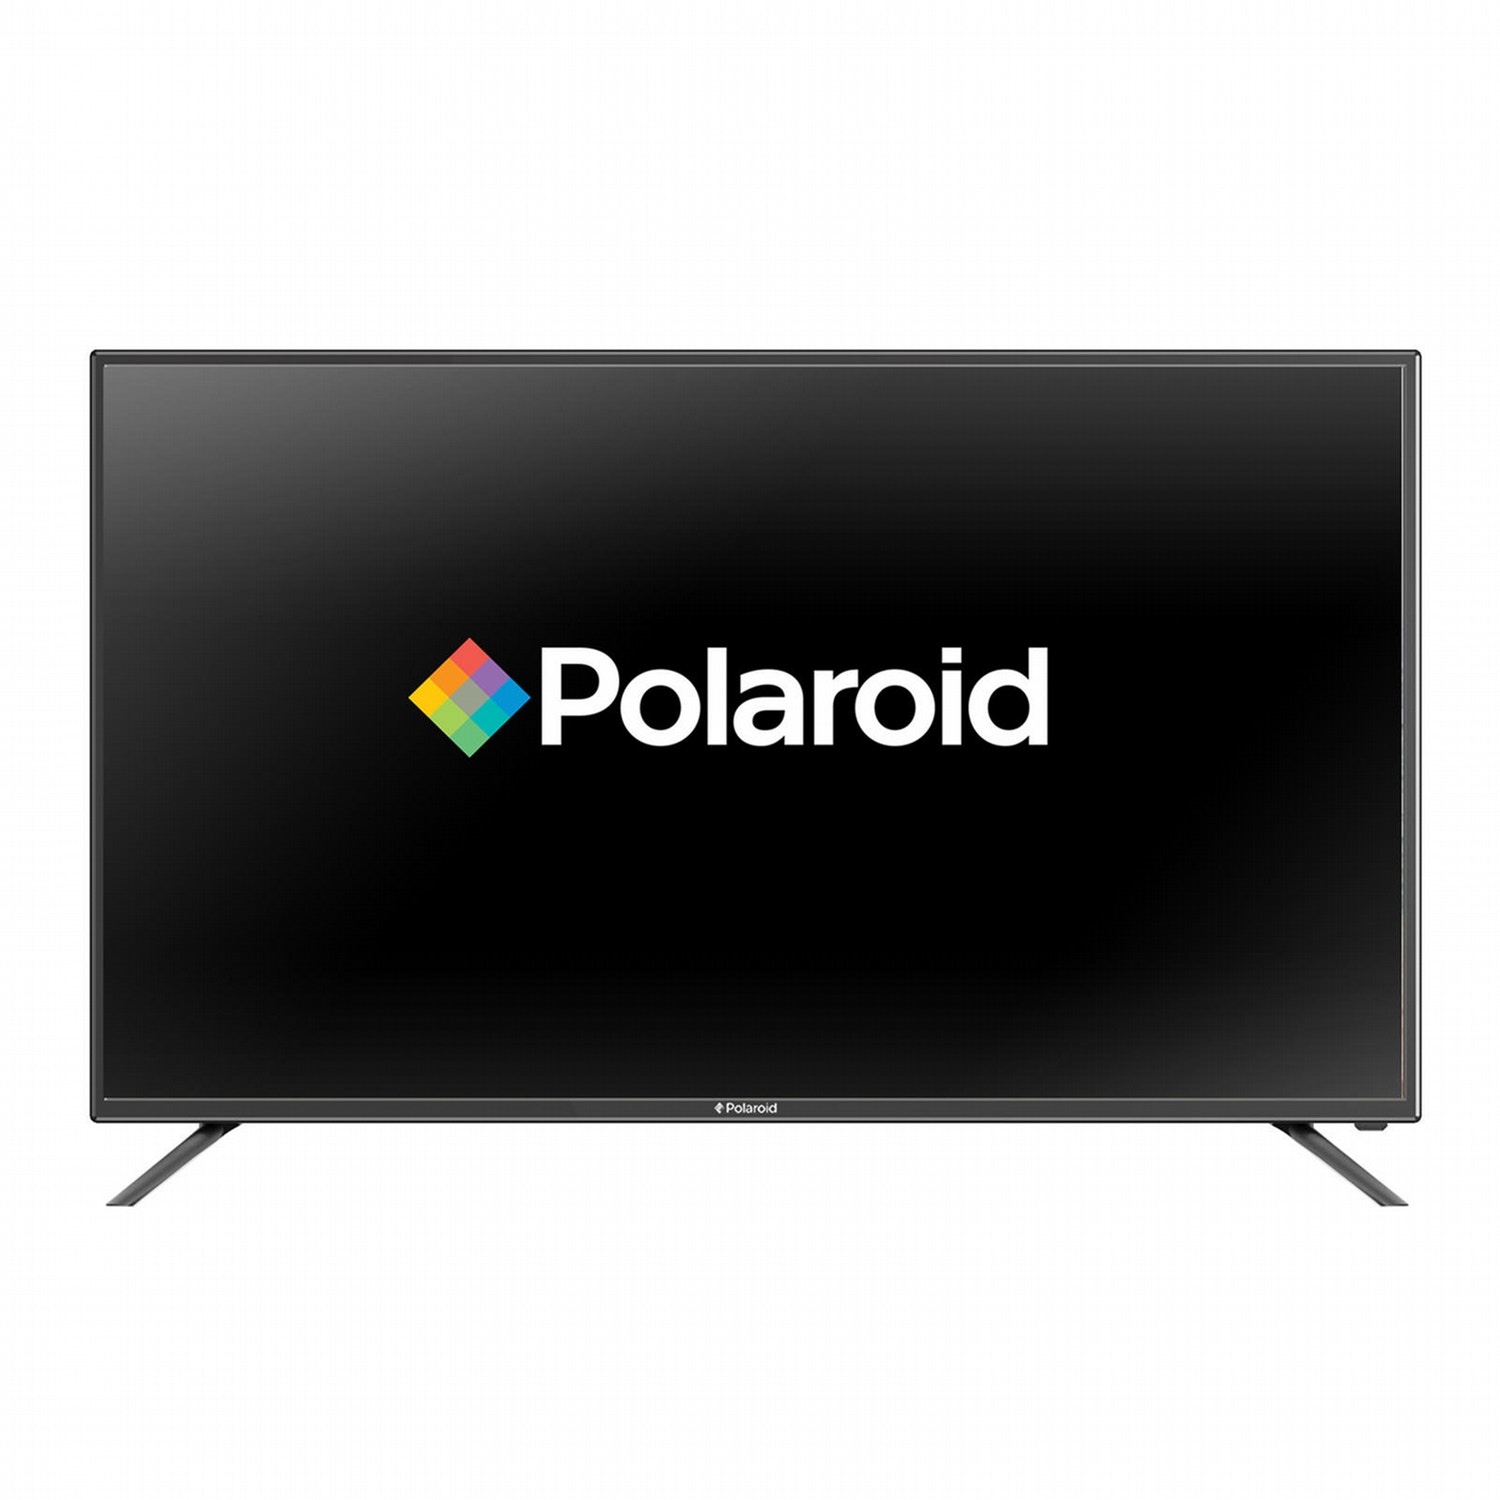 polaroid tv stand